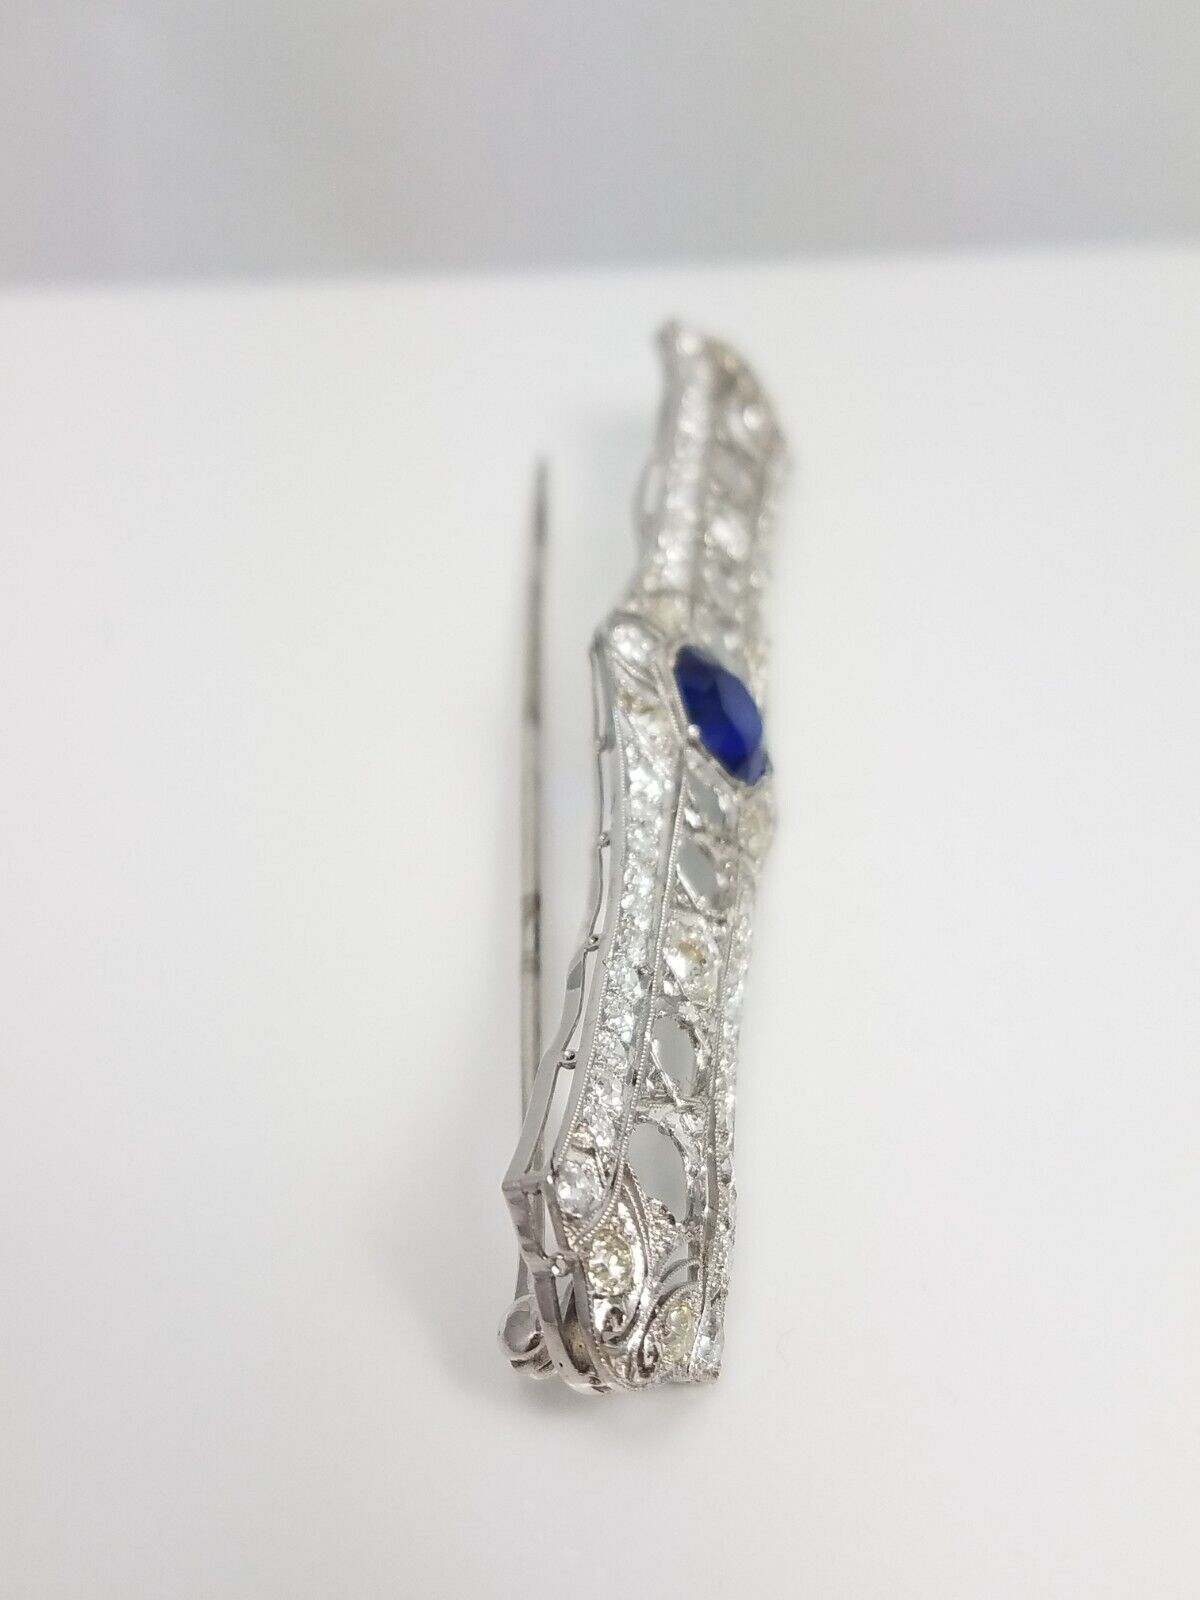 To Restore! Early 1900's Platinum Diamond Brooch Pin